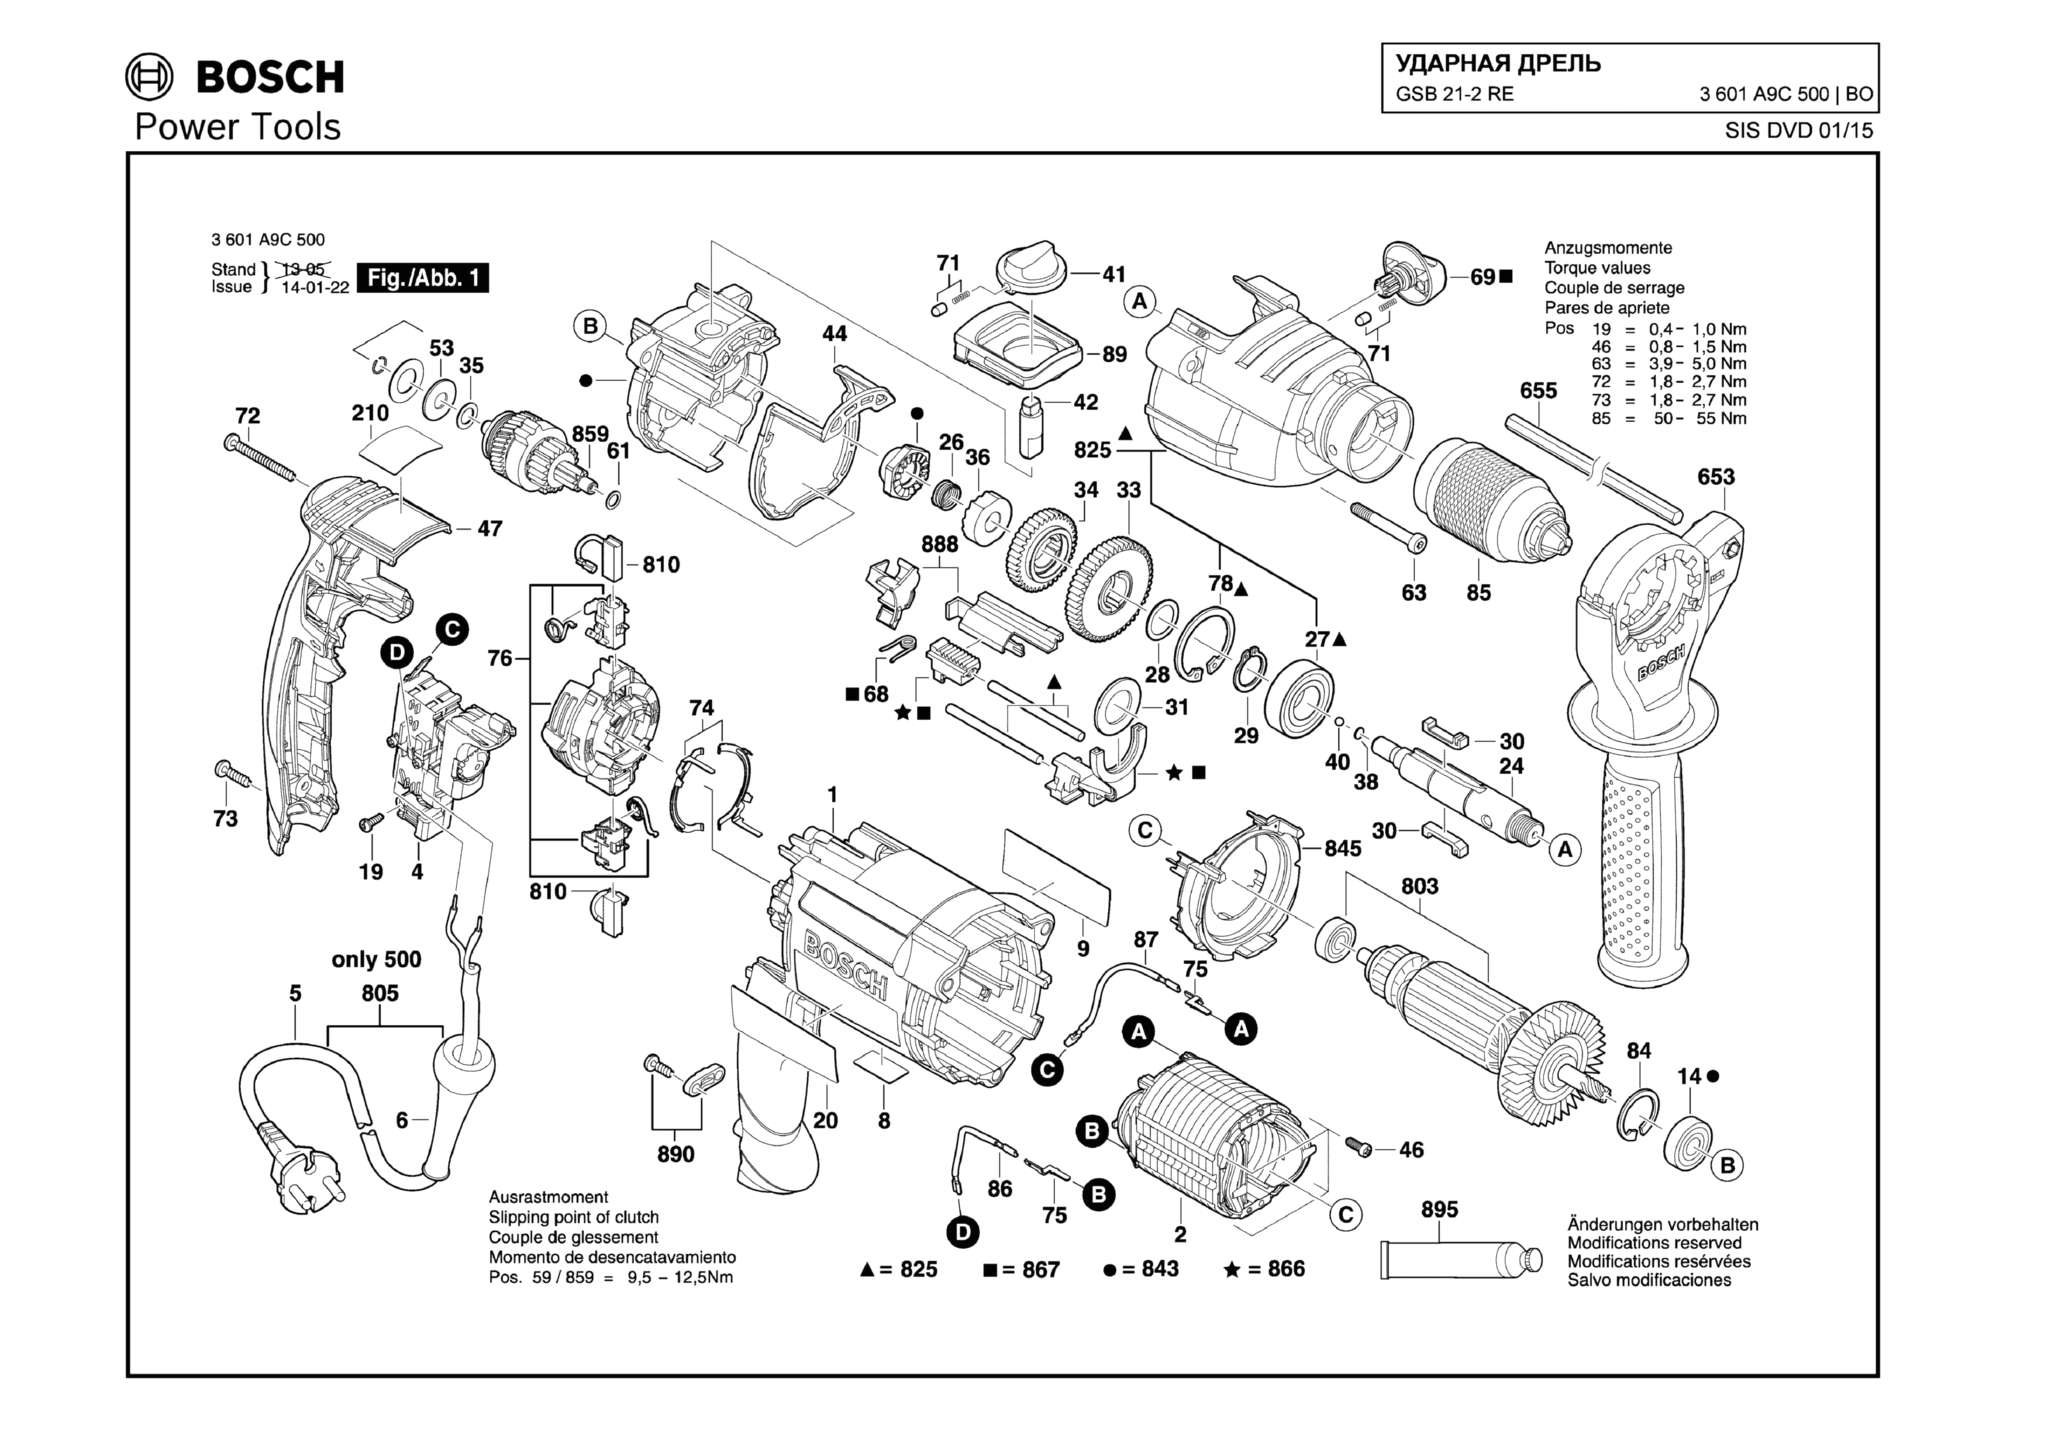 Запчасти, схема и деталировка Bosch GSB 21-2 RE (ТИП 3601A9C500)